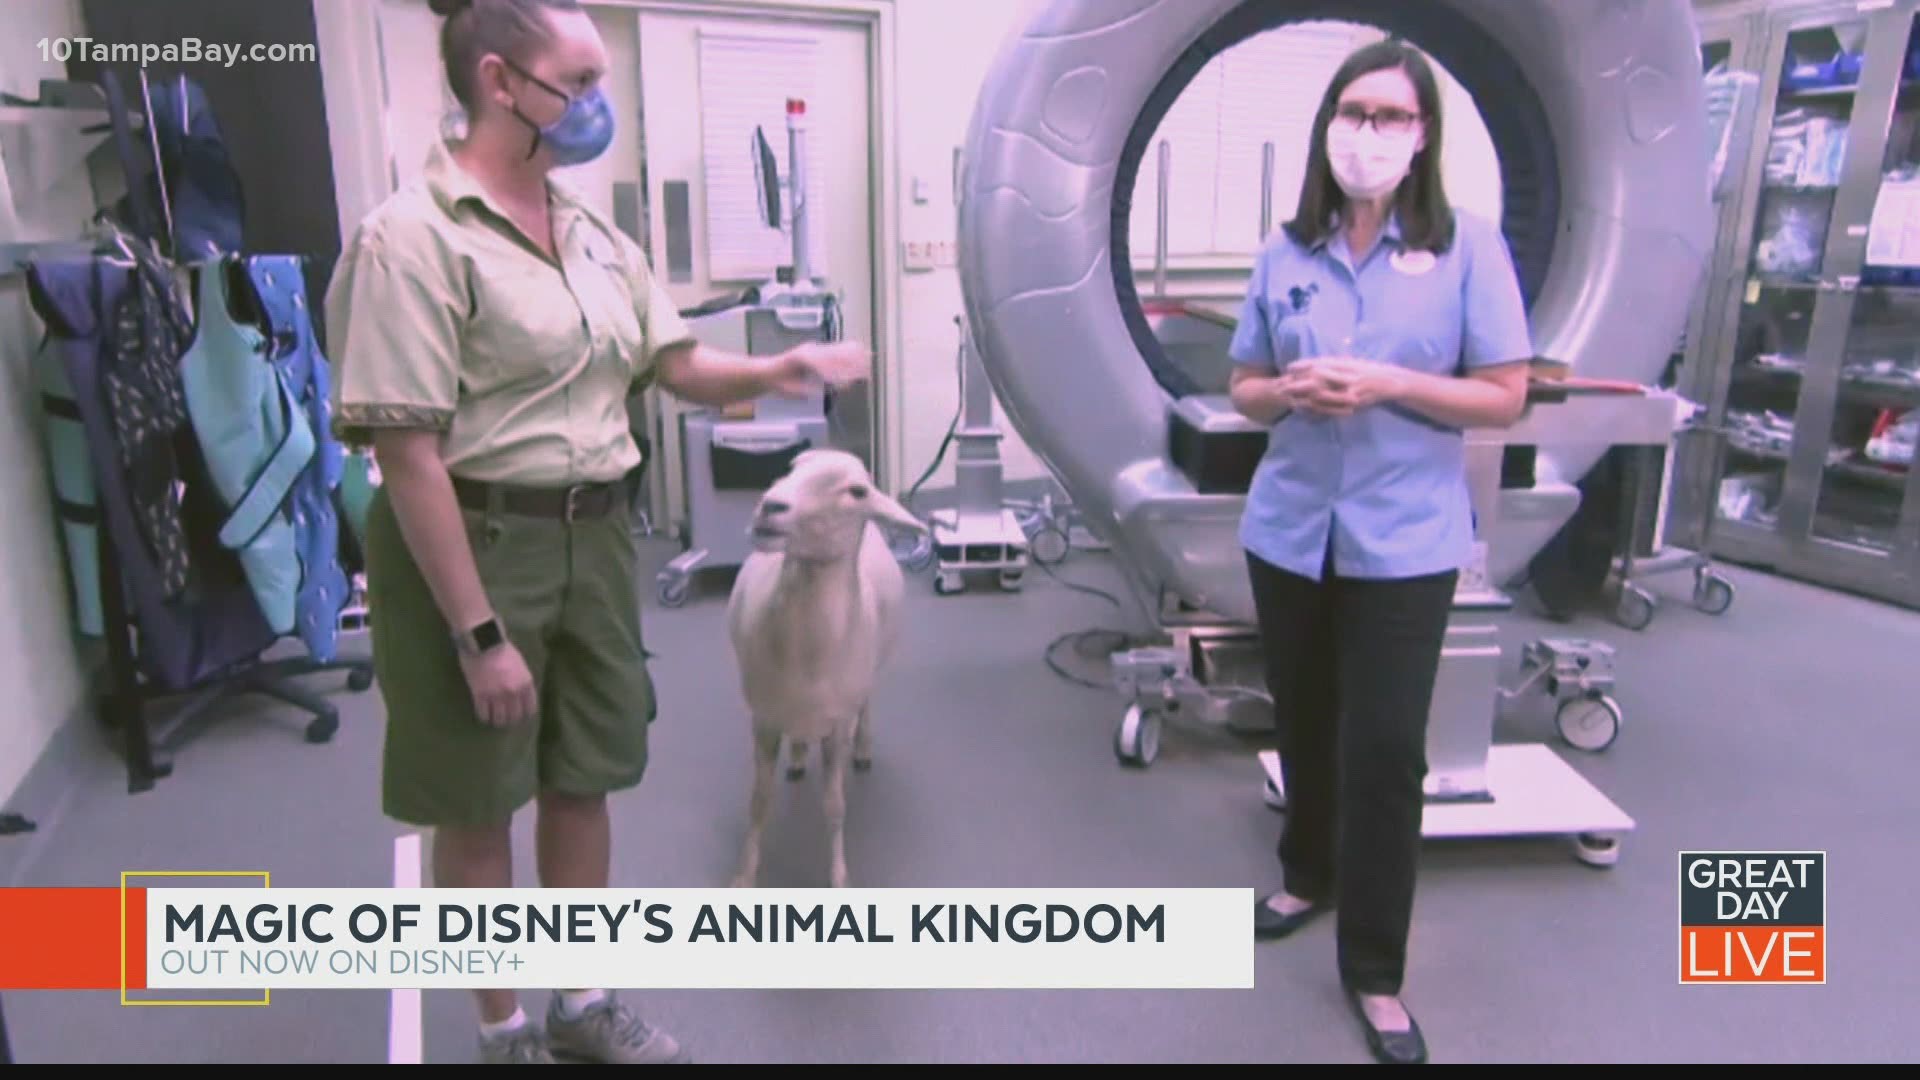 'Magic of Disney's Animal Kingdom' now on Disney+